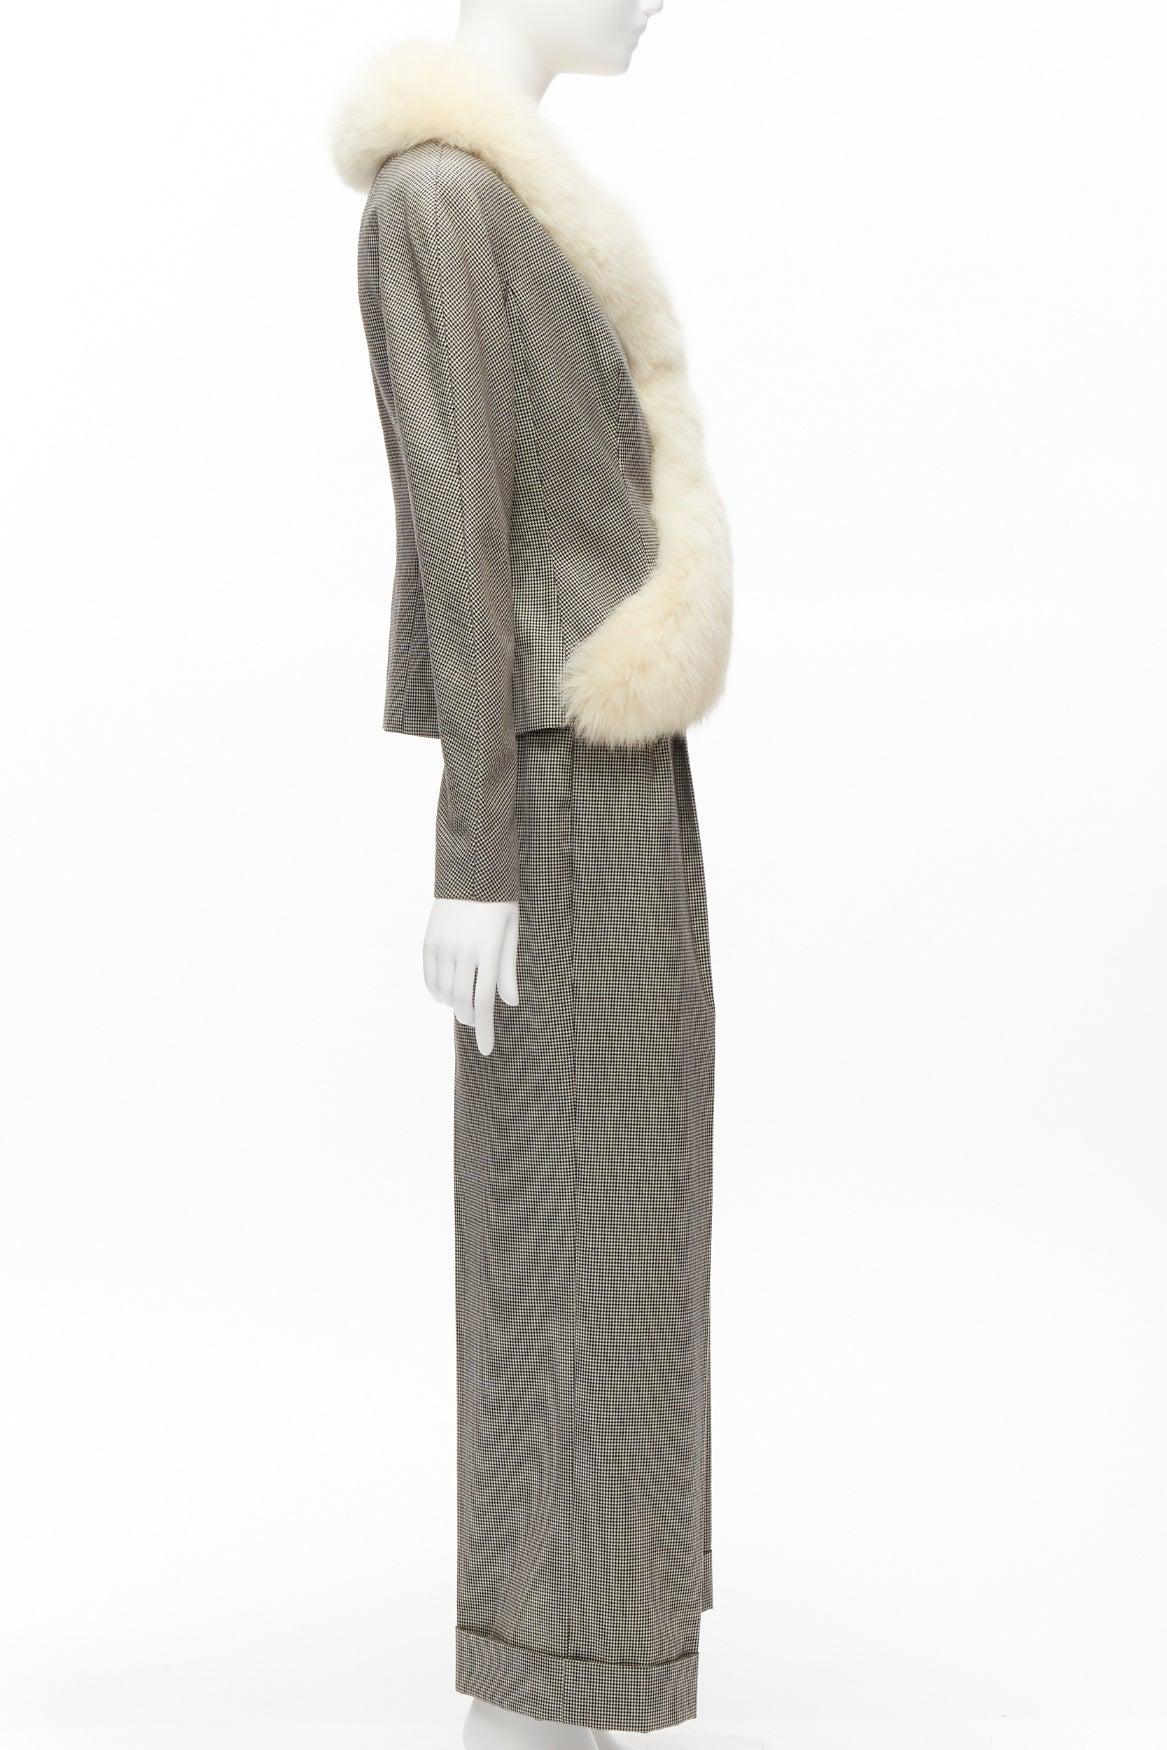 CHRISTIAN DIOR Vintage Galliano 1999 white fur trim grey houndstooth jacket 1